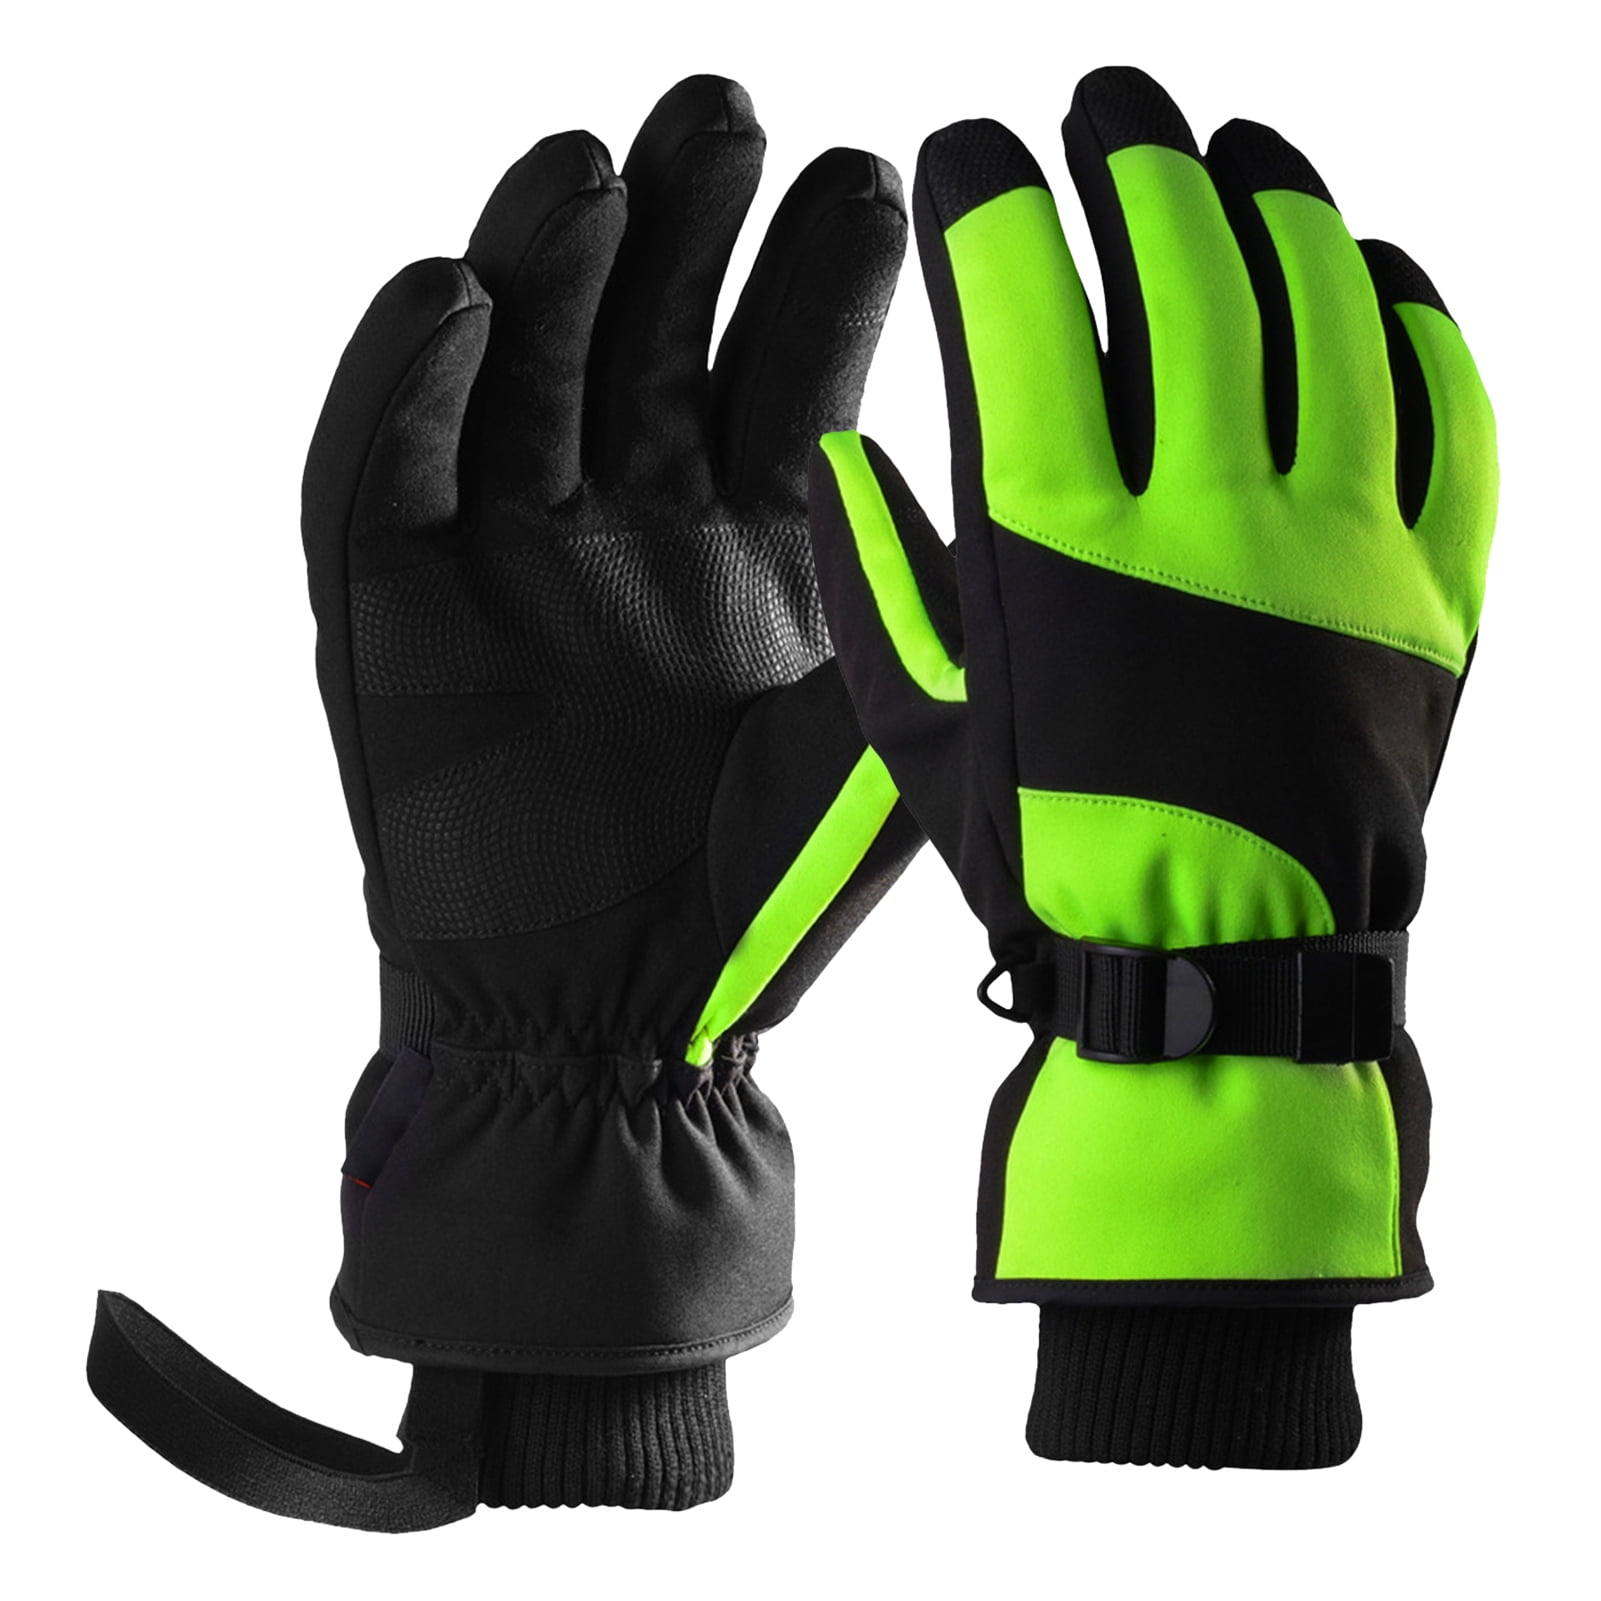 Details about   -10℃ Waterproof Winter Ski Gloves Touch Screen Warm Mittens Snow Snowboarding US 